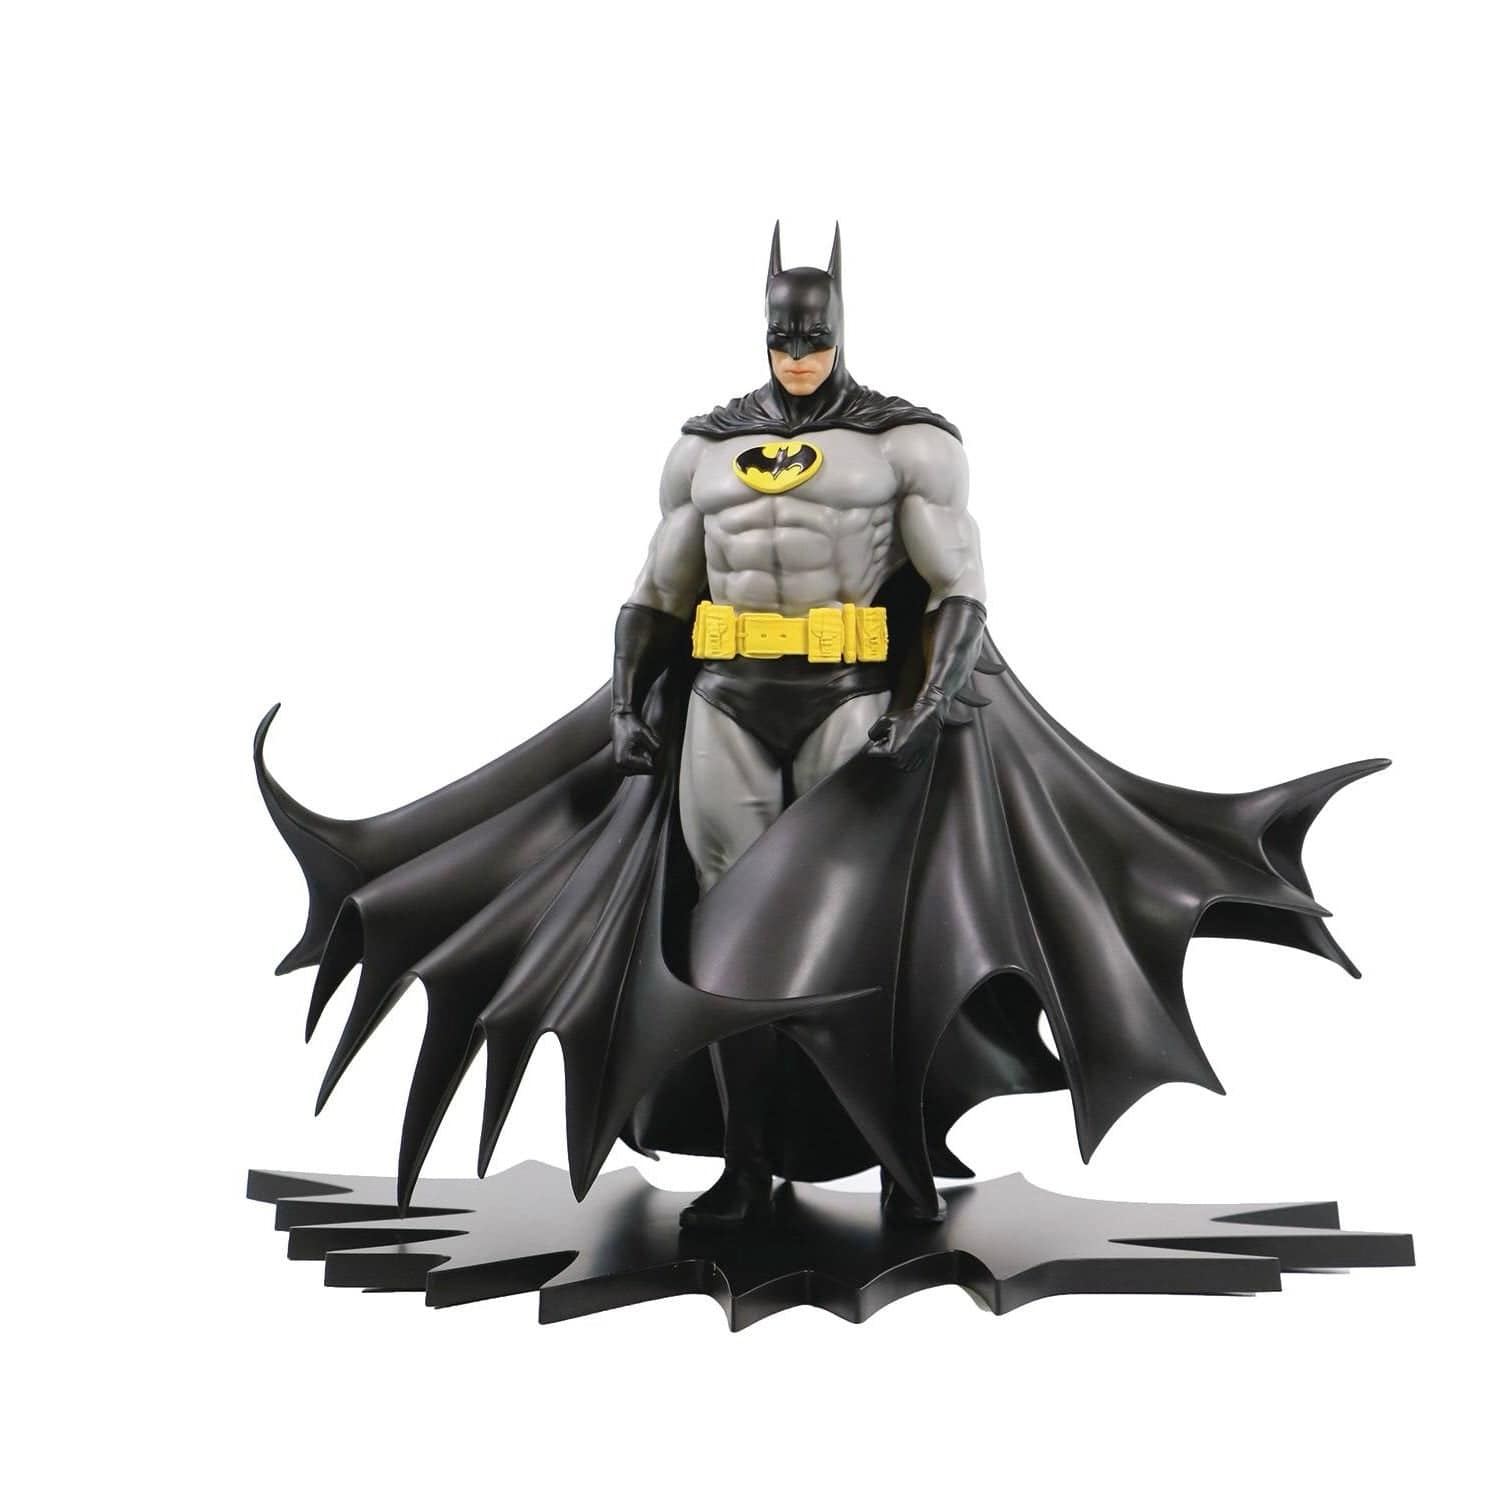 Pure Arts Limited DC Heroes Batman Black Version 1:8 Scale Statue (Previews Exclusive)